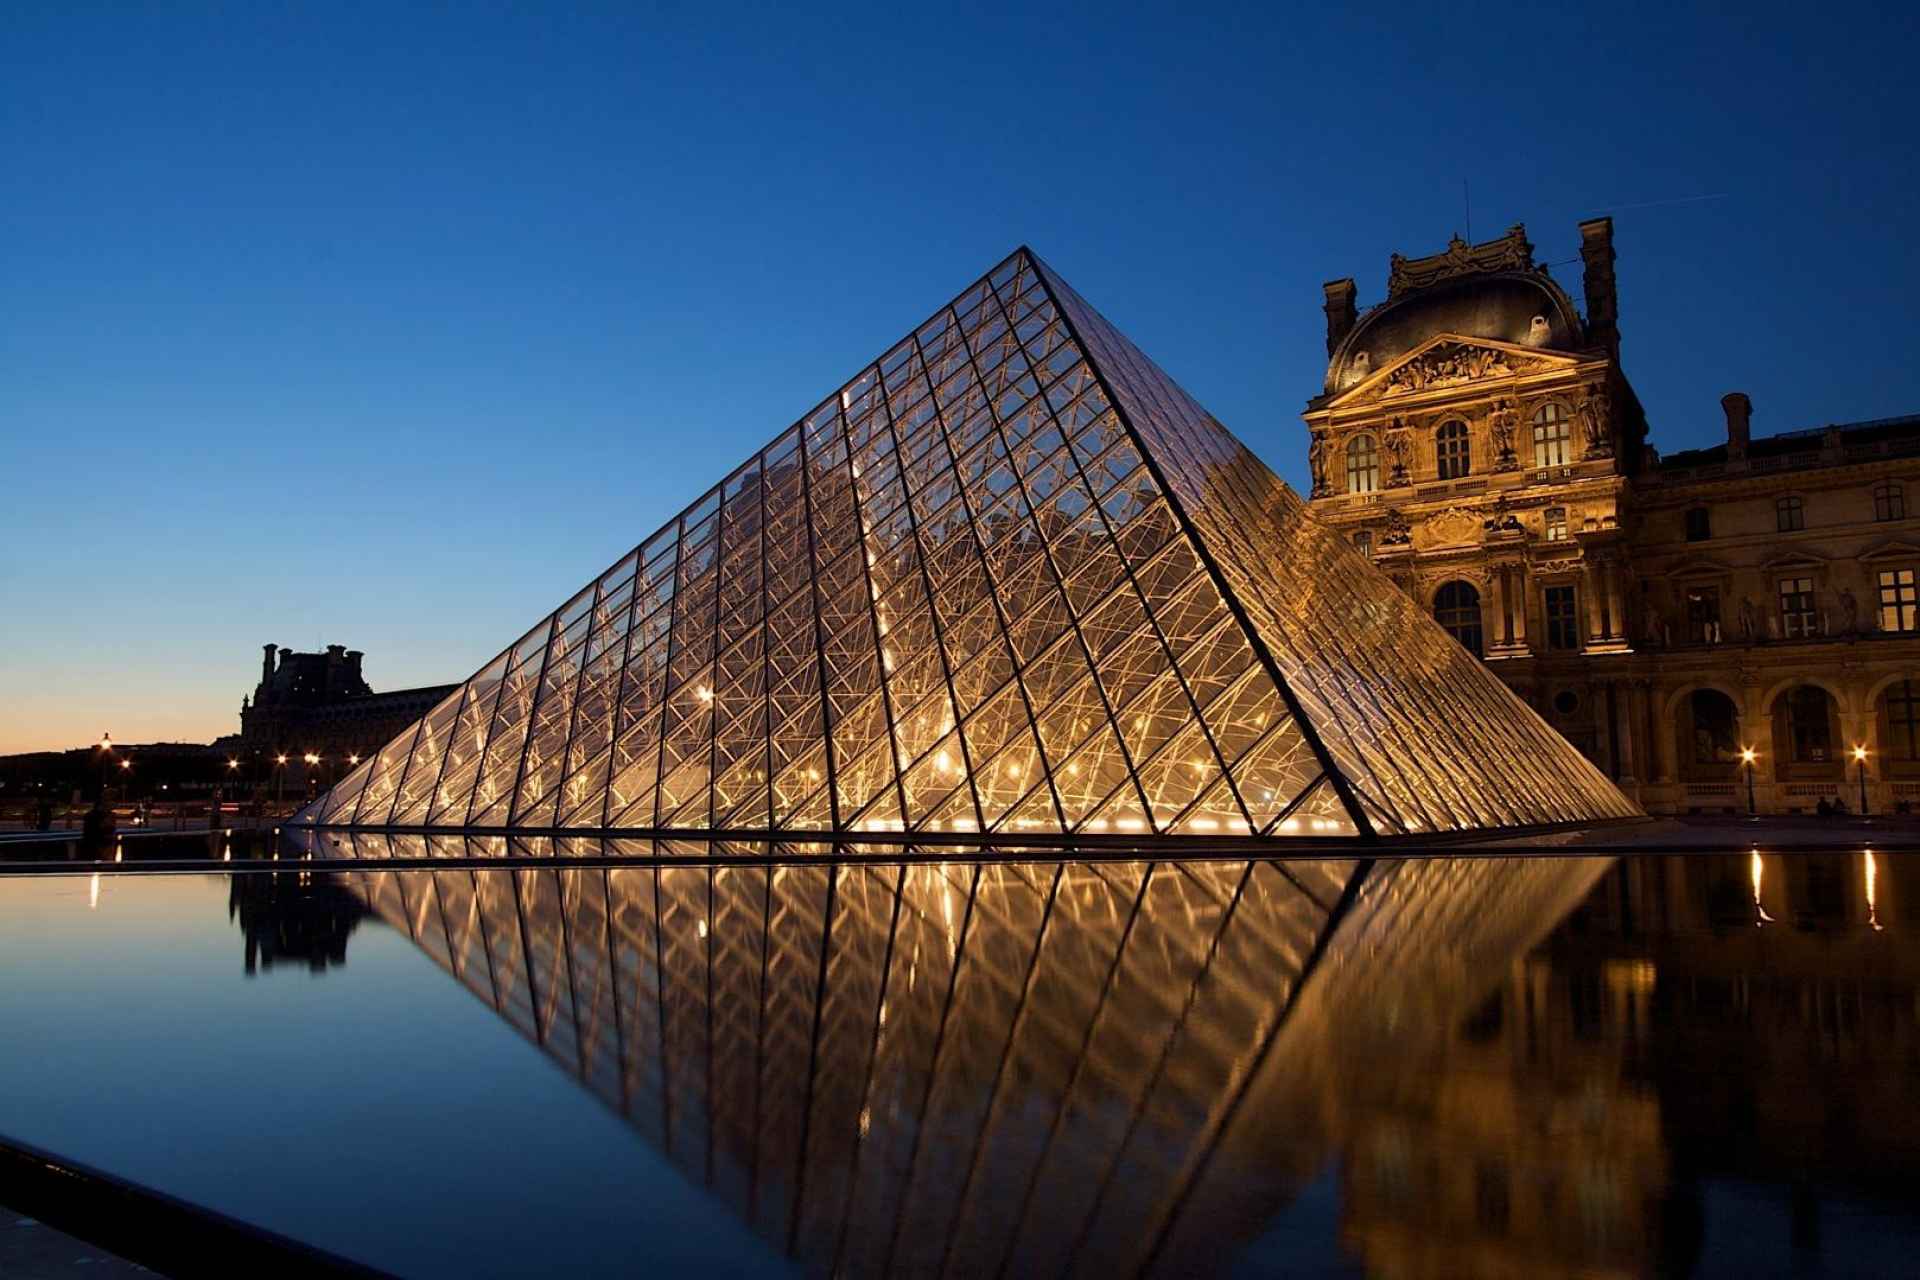 Окрестности парижа. Франция музей Лувр. Пирамида Лувра в Париже. Париж Франция достопримечательности Лувр. Достопримечательности Франции пирамида Лувра.